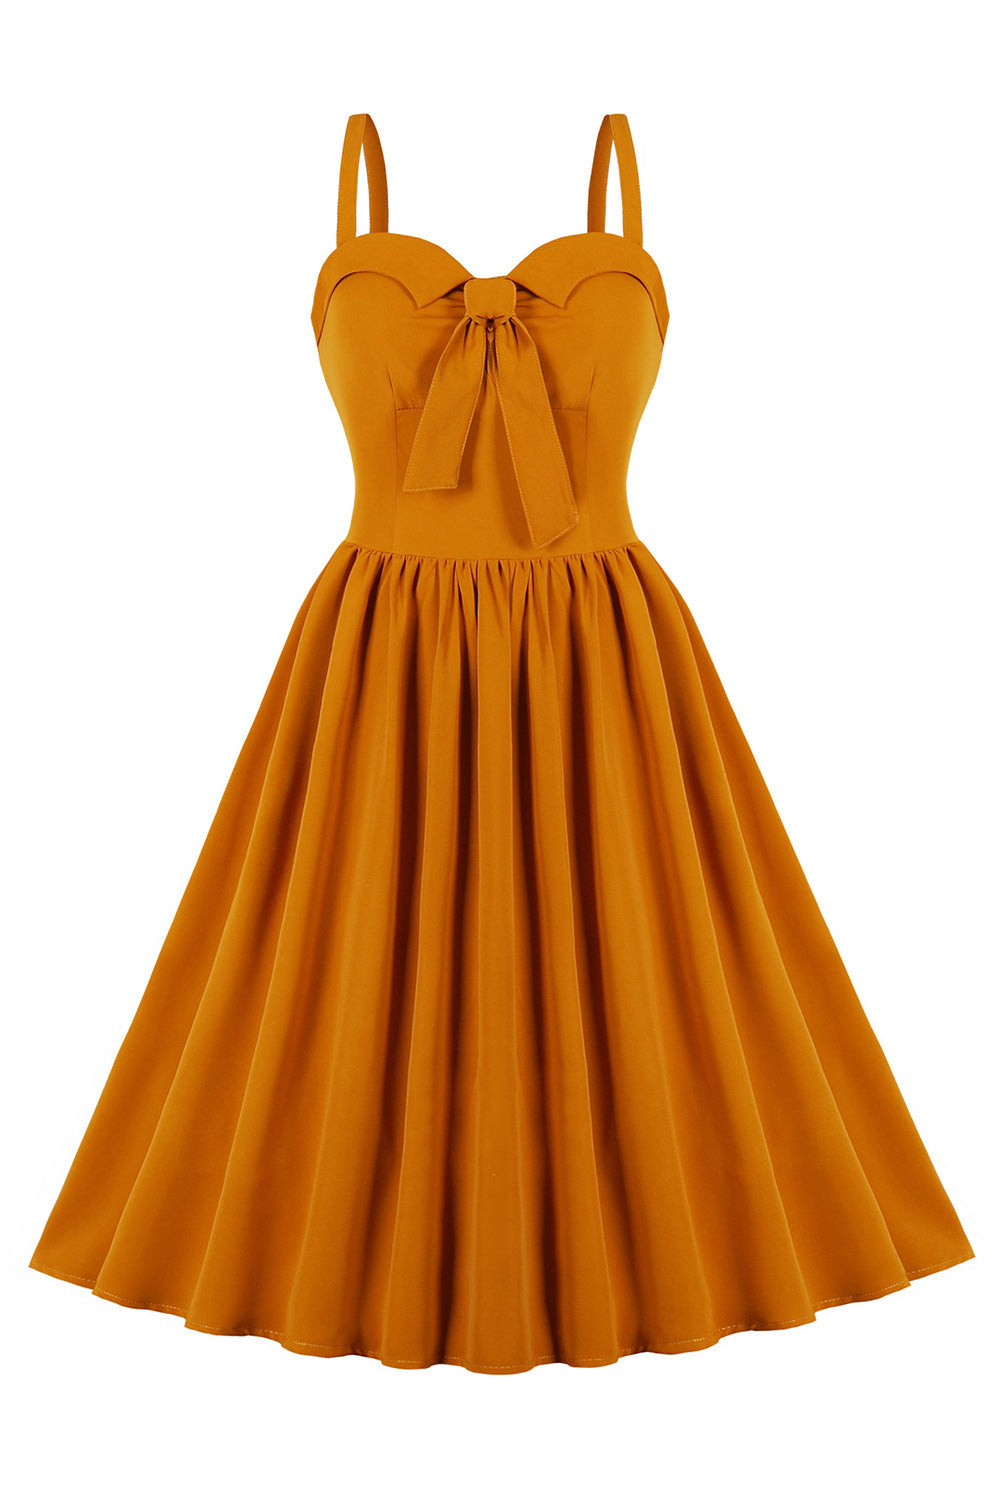 Spaghettiträger Gelbes Swing Vintage Kleid